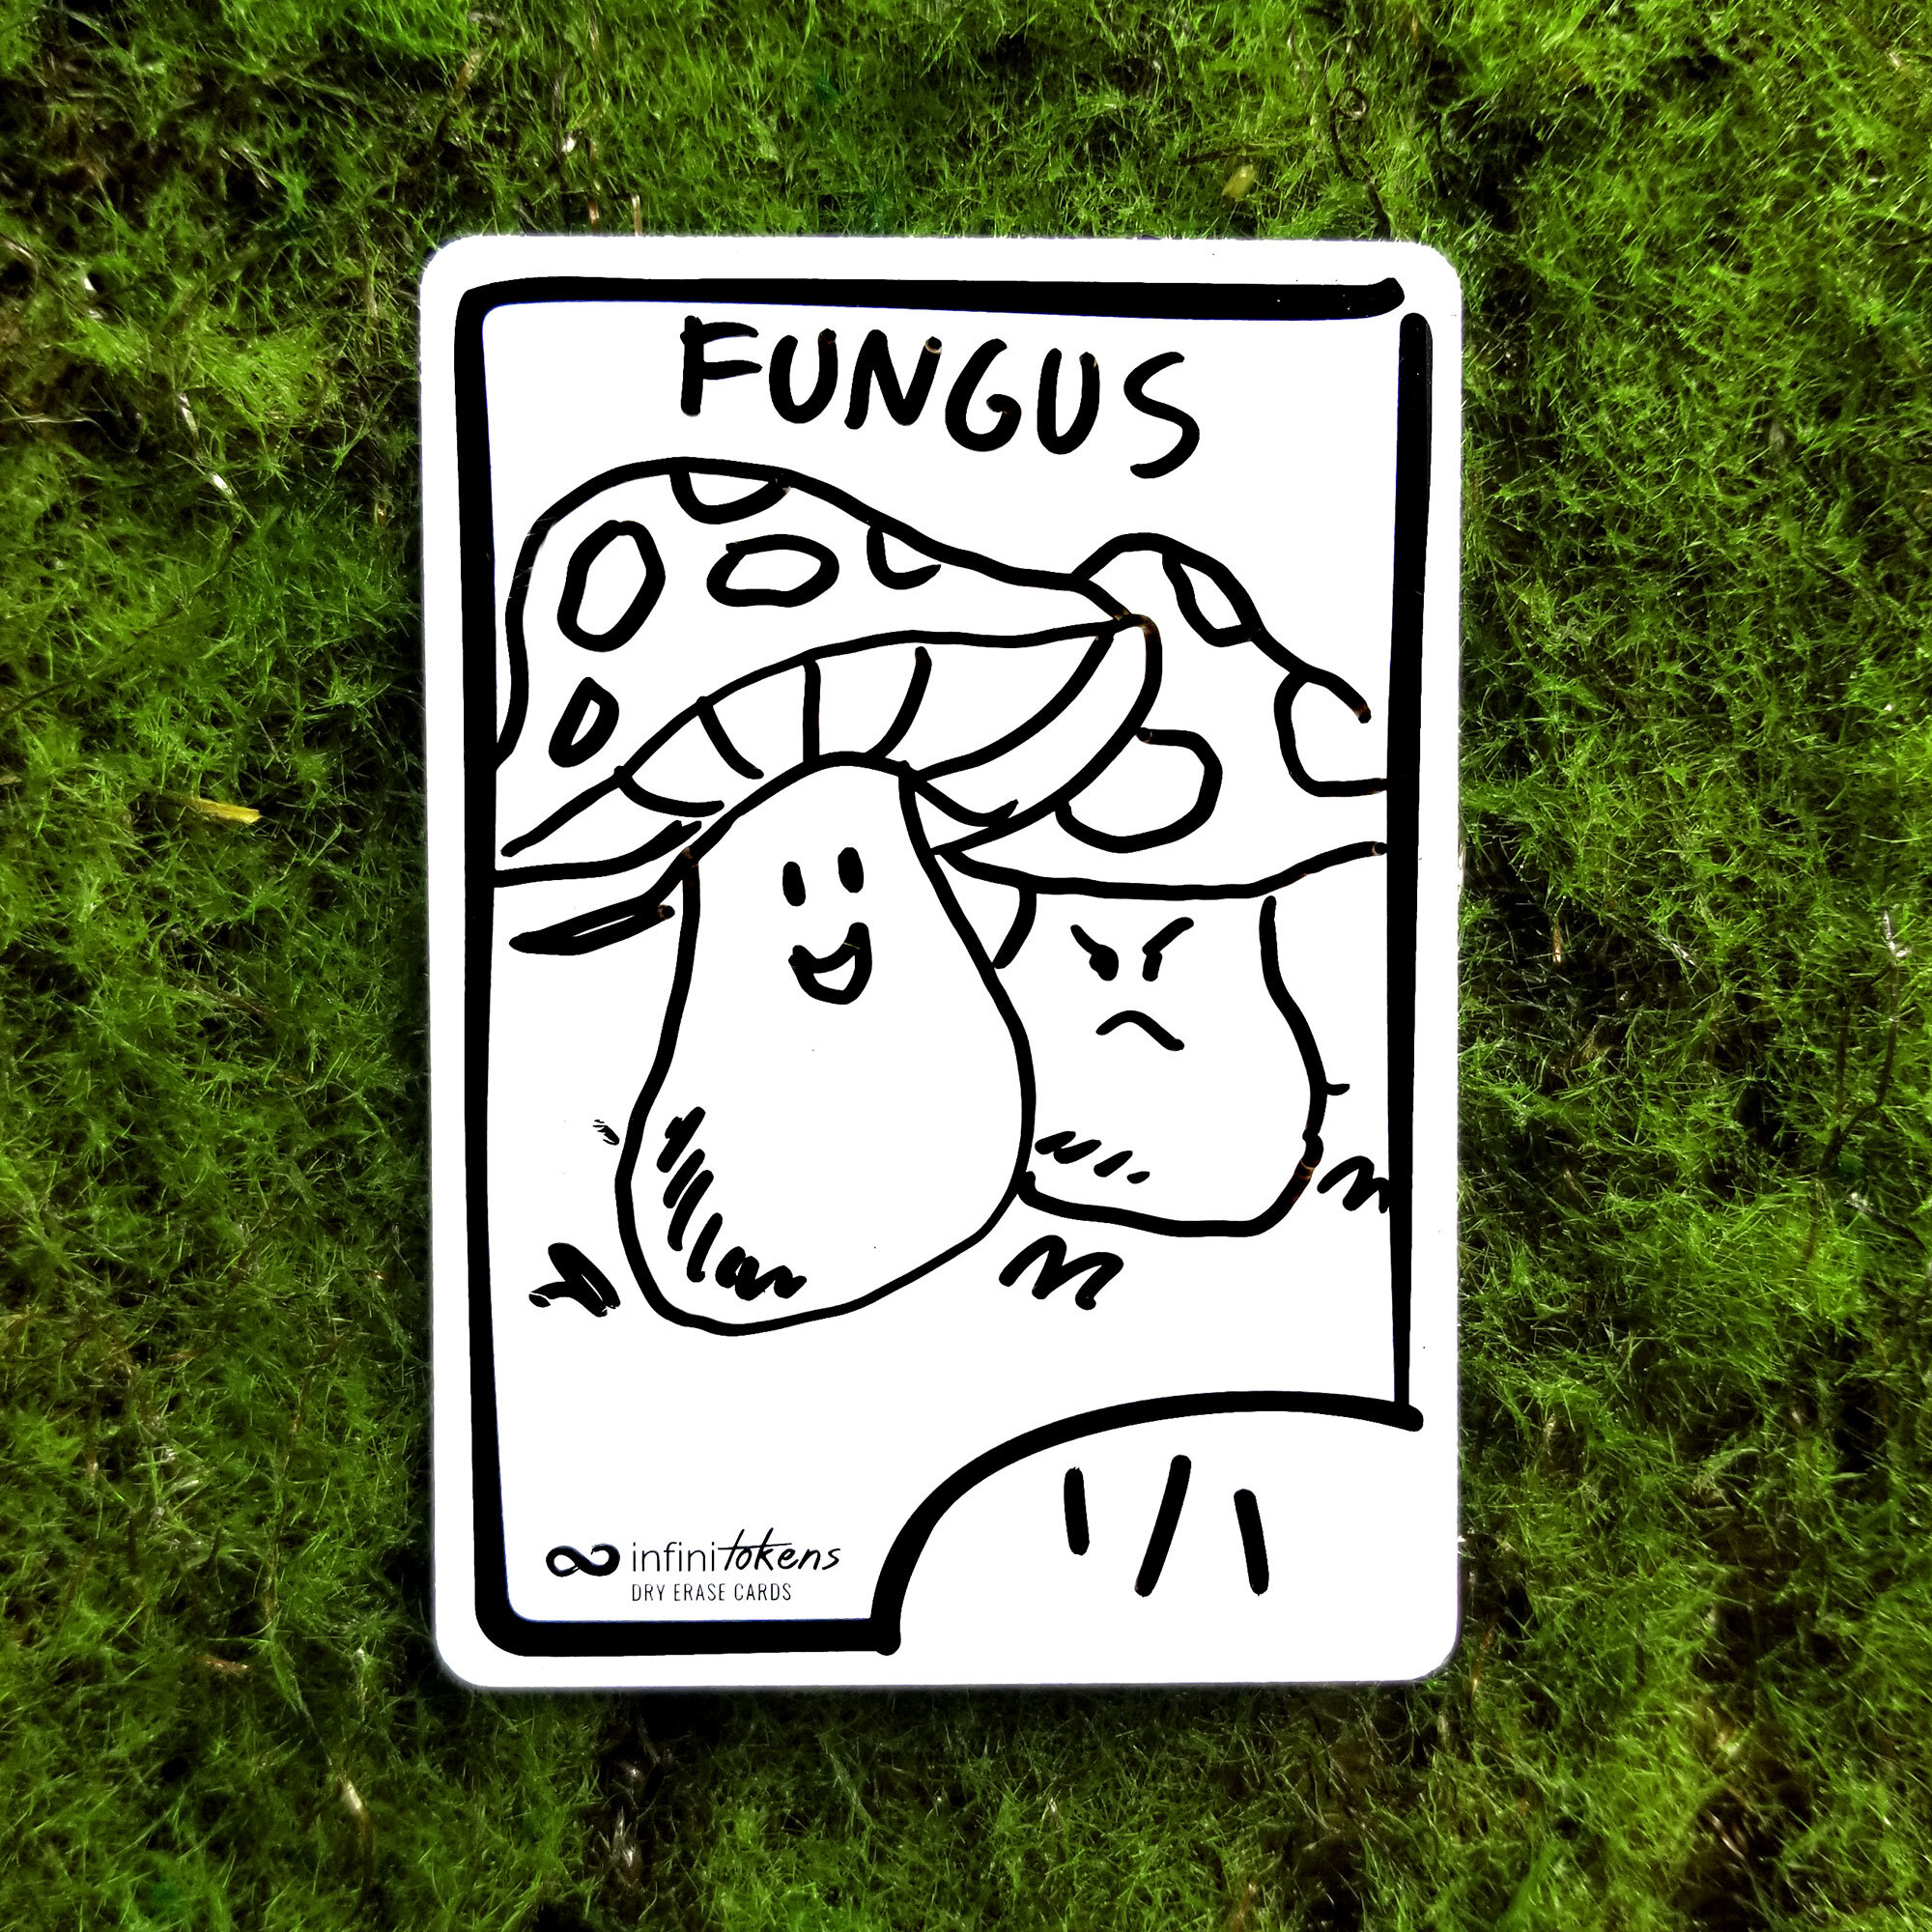 Day 1 - Fungus